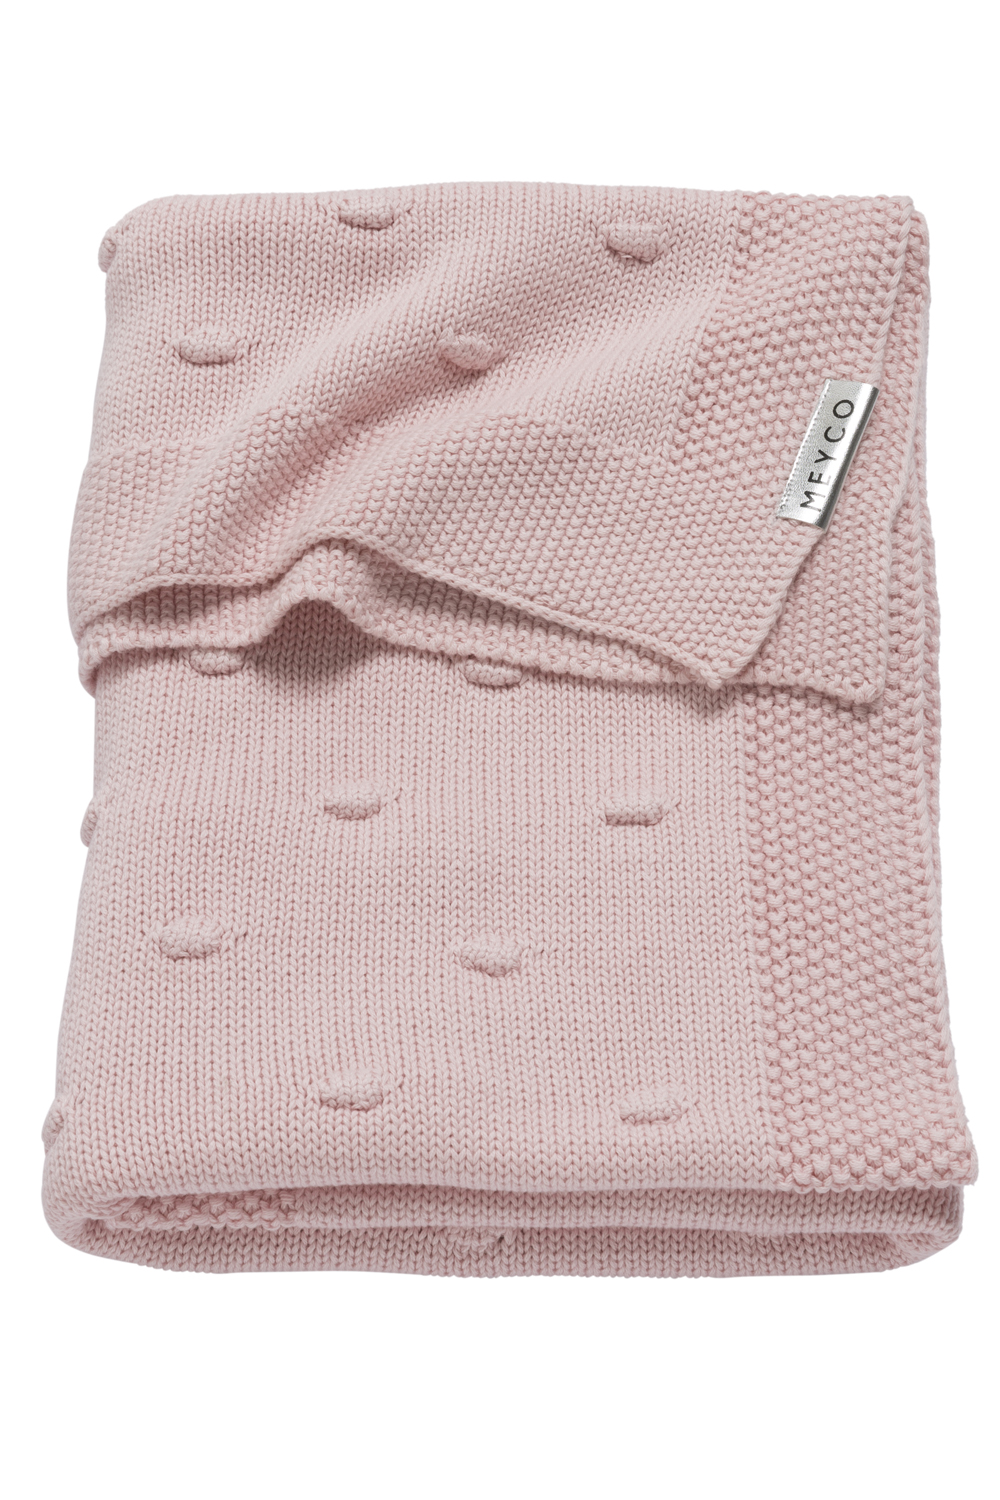 Cot Bed Blanket Knots - Pink - 100X150cm